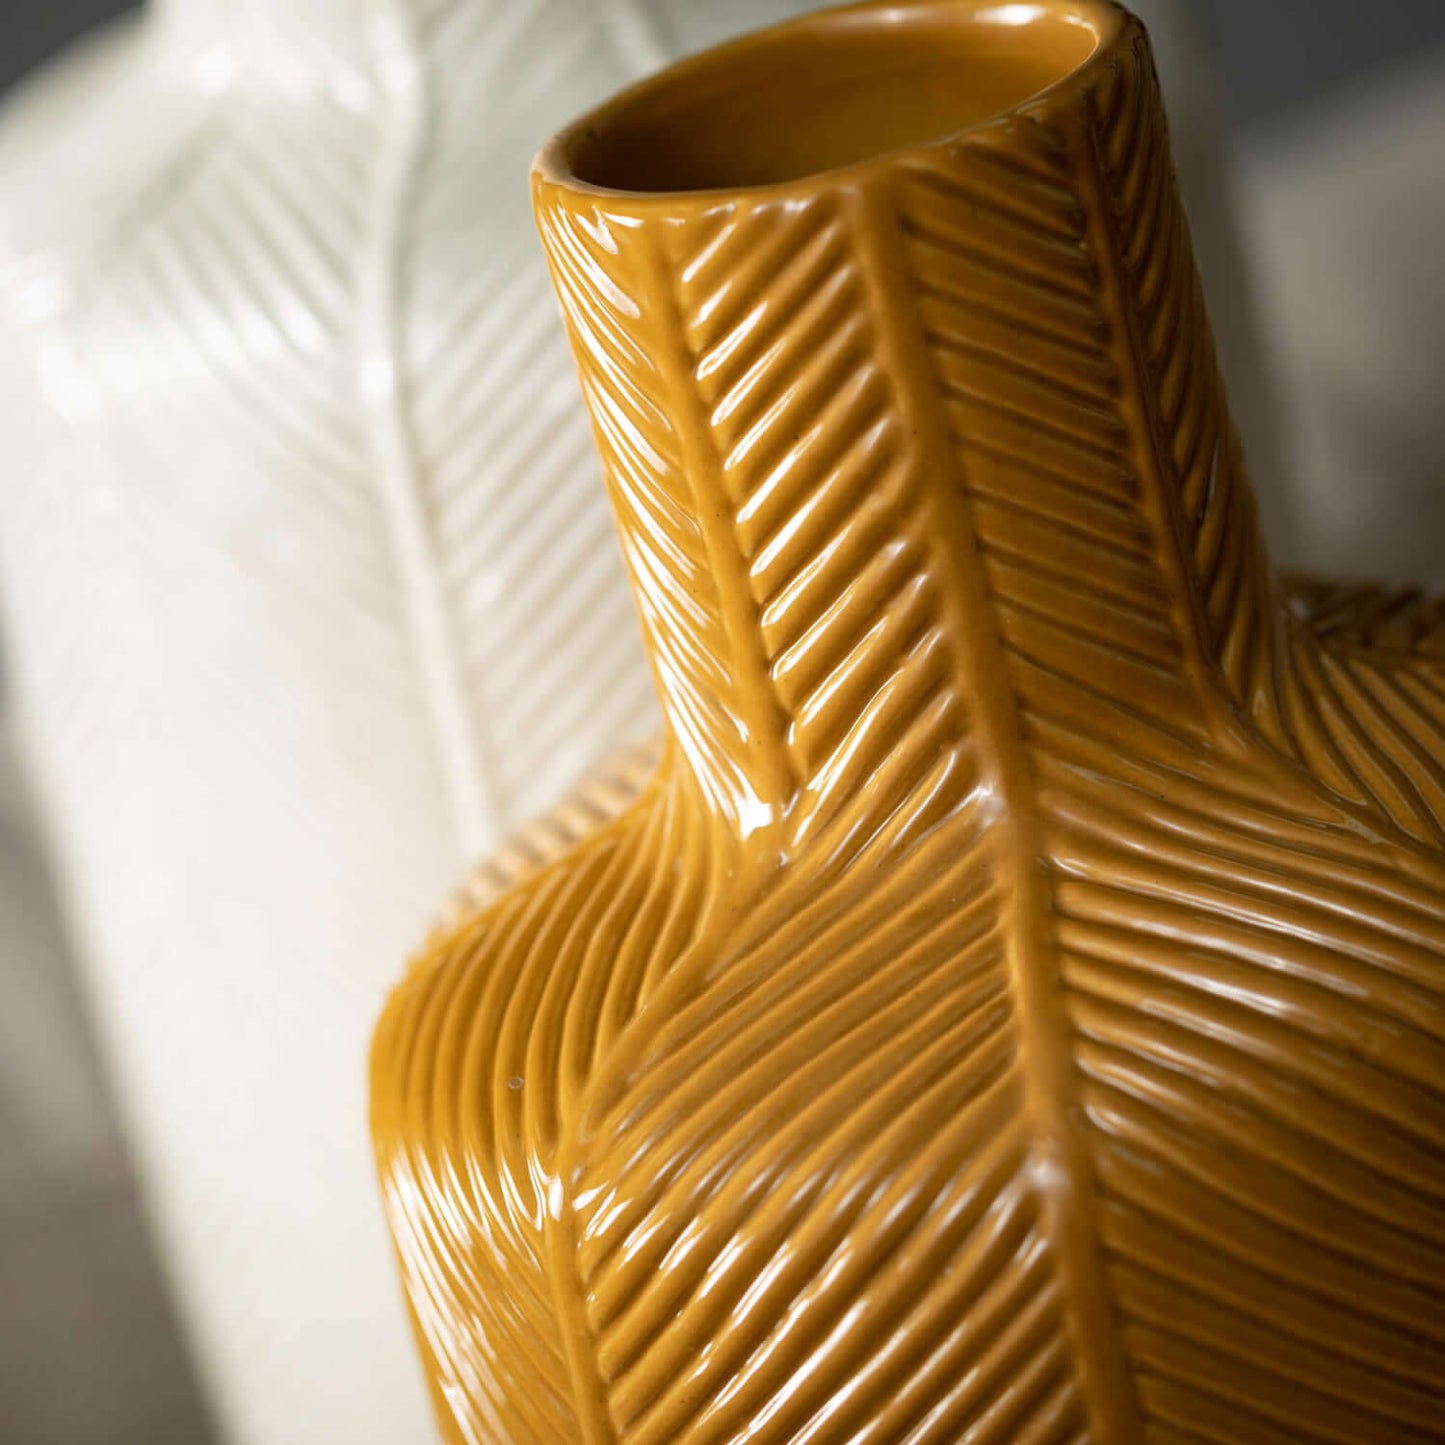 Artisanal Ceramic Vase